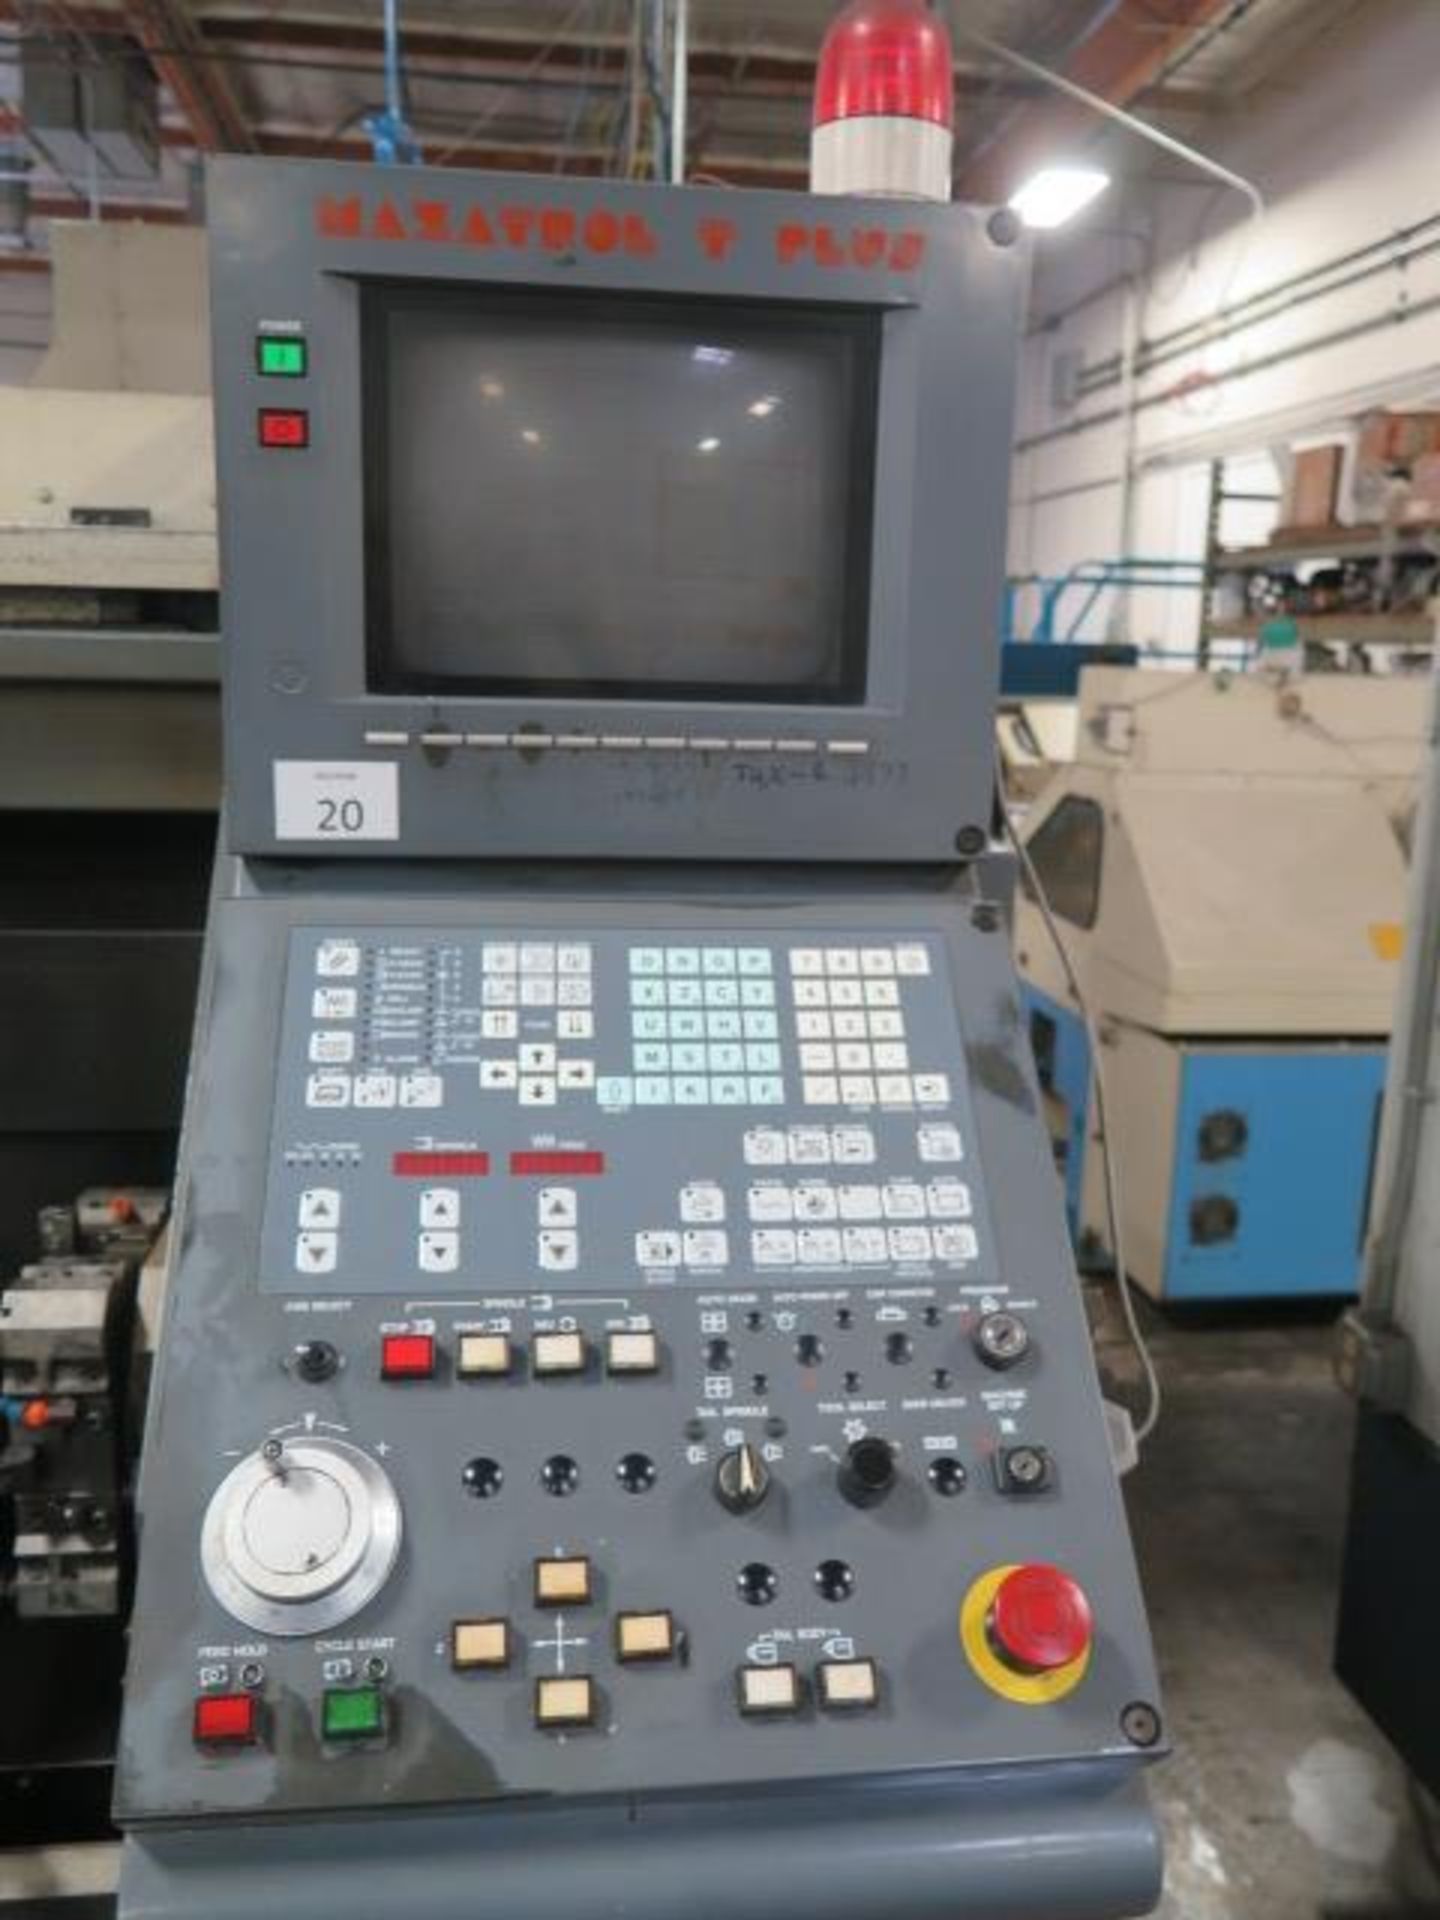 1997 Mazak Quick Turn 10 CNC Turning Center s/n 126753 w/ Mazatrol T-PLUS Controls, SOLD AS IS - Image 10 of 12